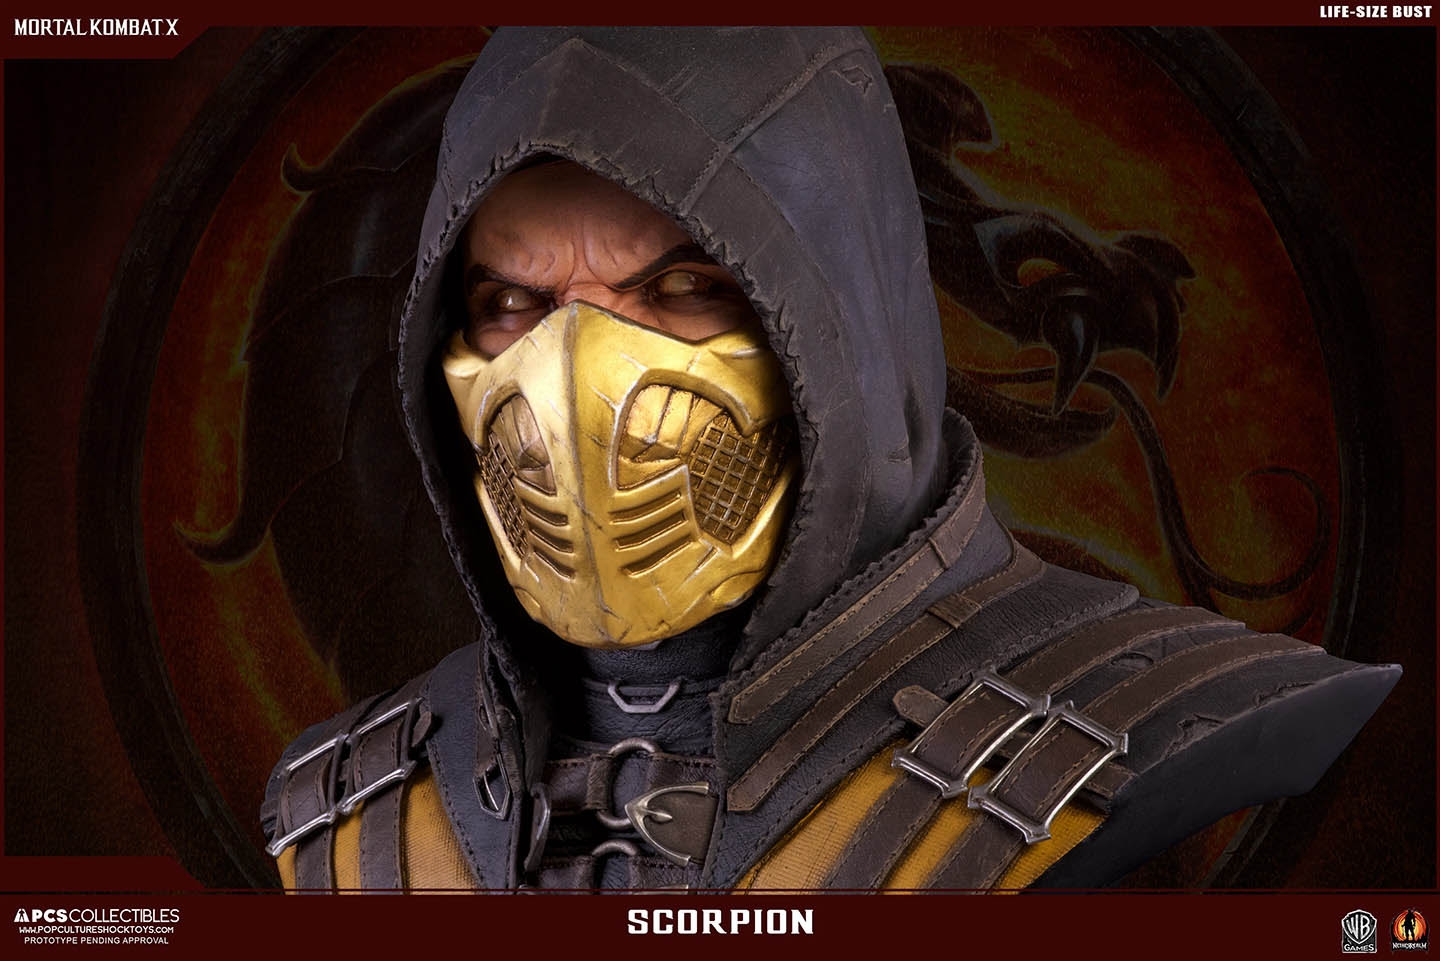 Scorpion-Bust-Pop-culture-Shock-Mortal-Kombat-X-012.jpg